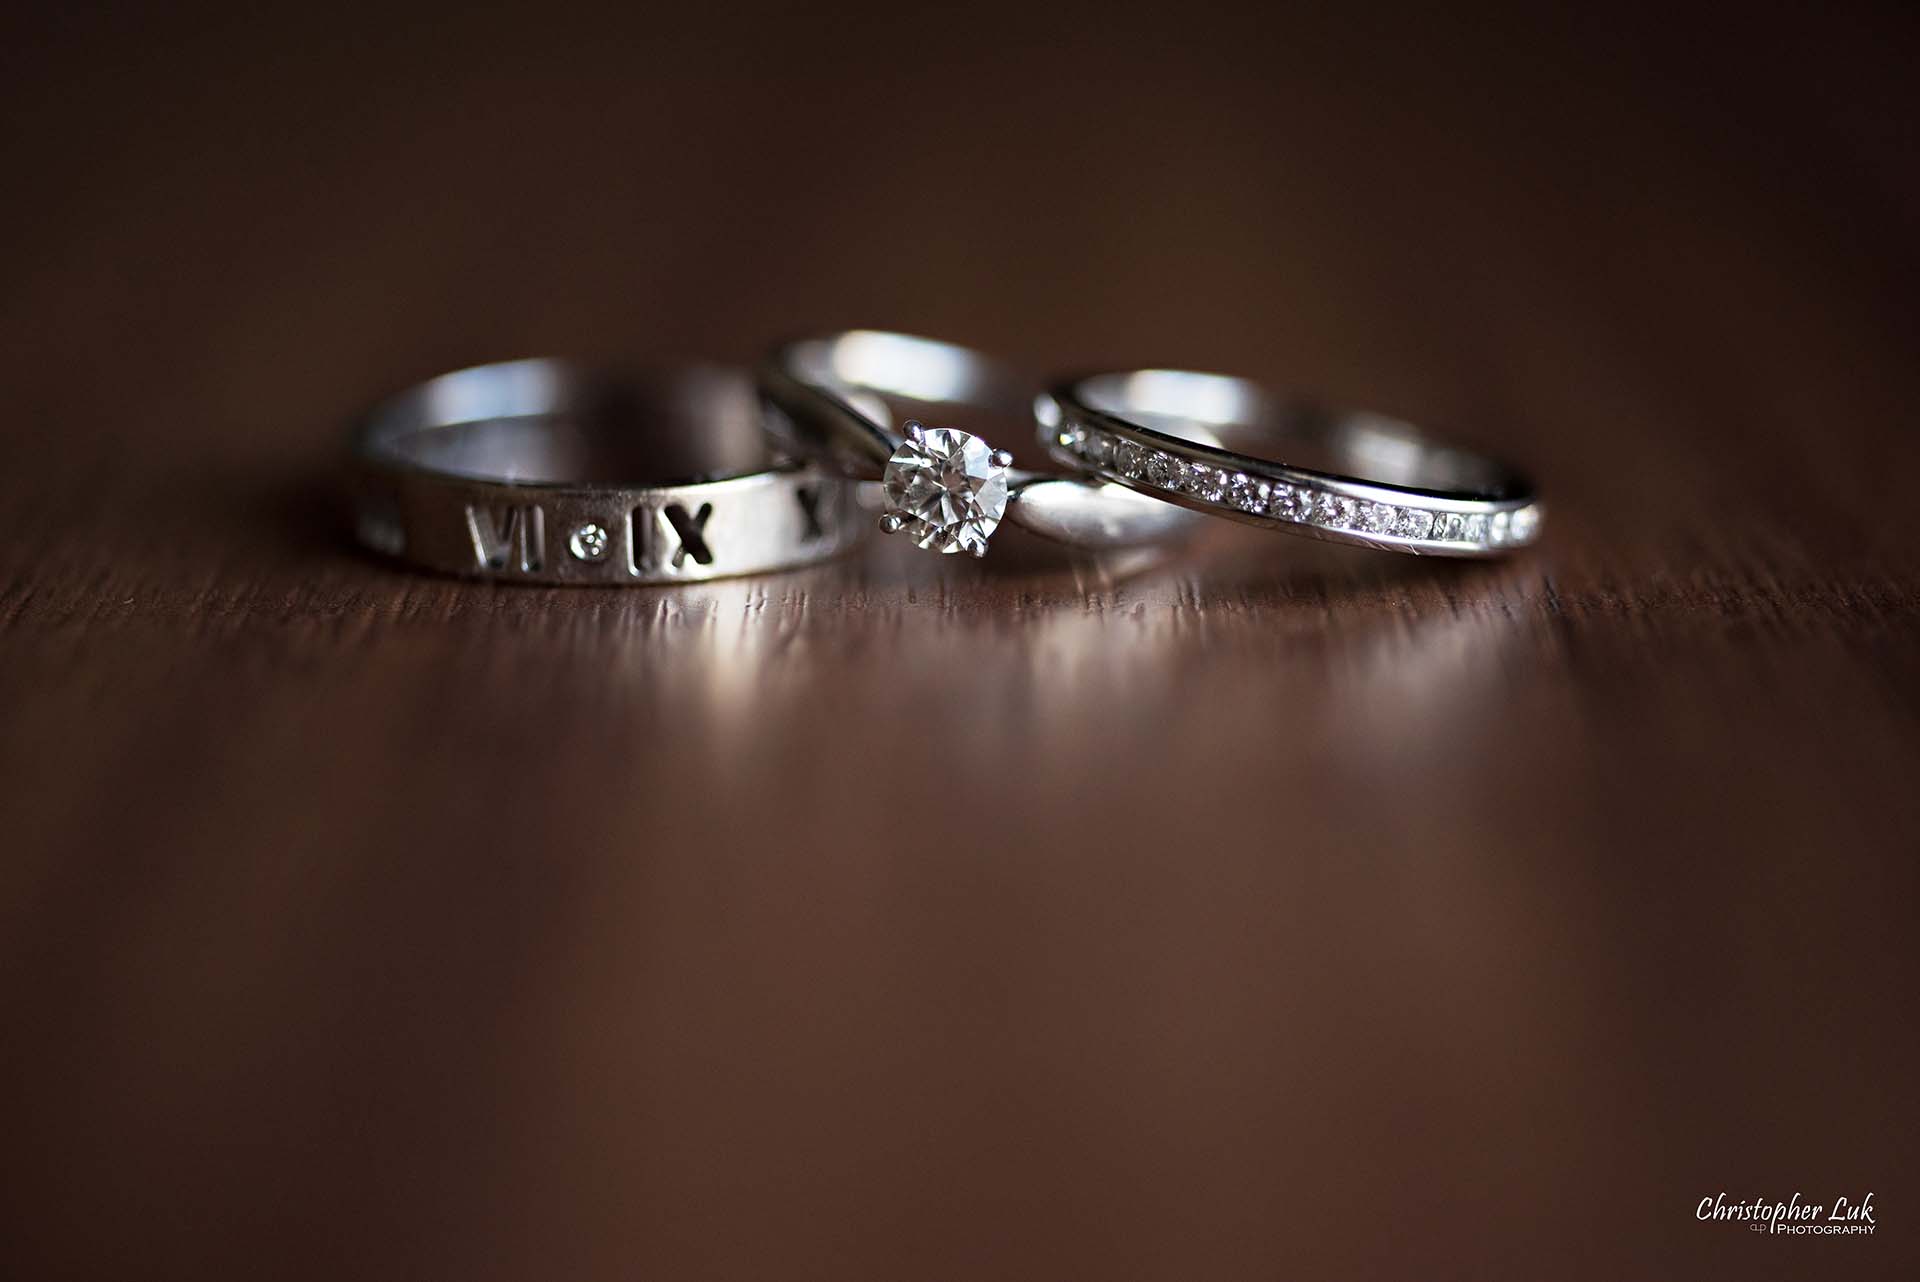 Christopher Luk Toronto Wedding Photographer Hotel Bride Getting Ready Details Diamond Engagement Ring Bands 